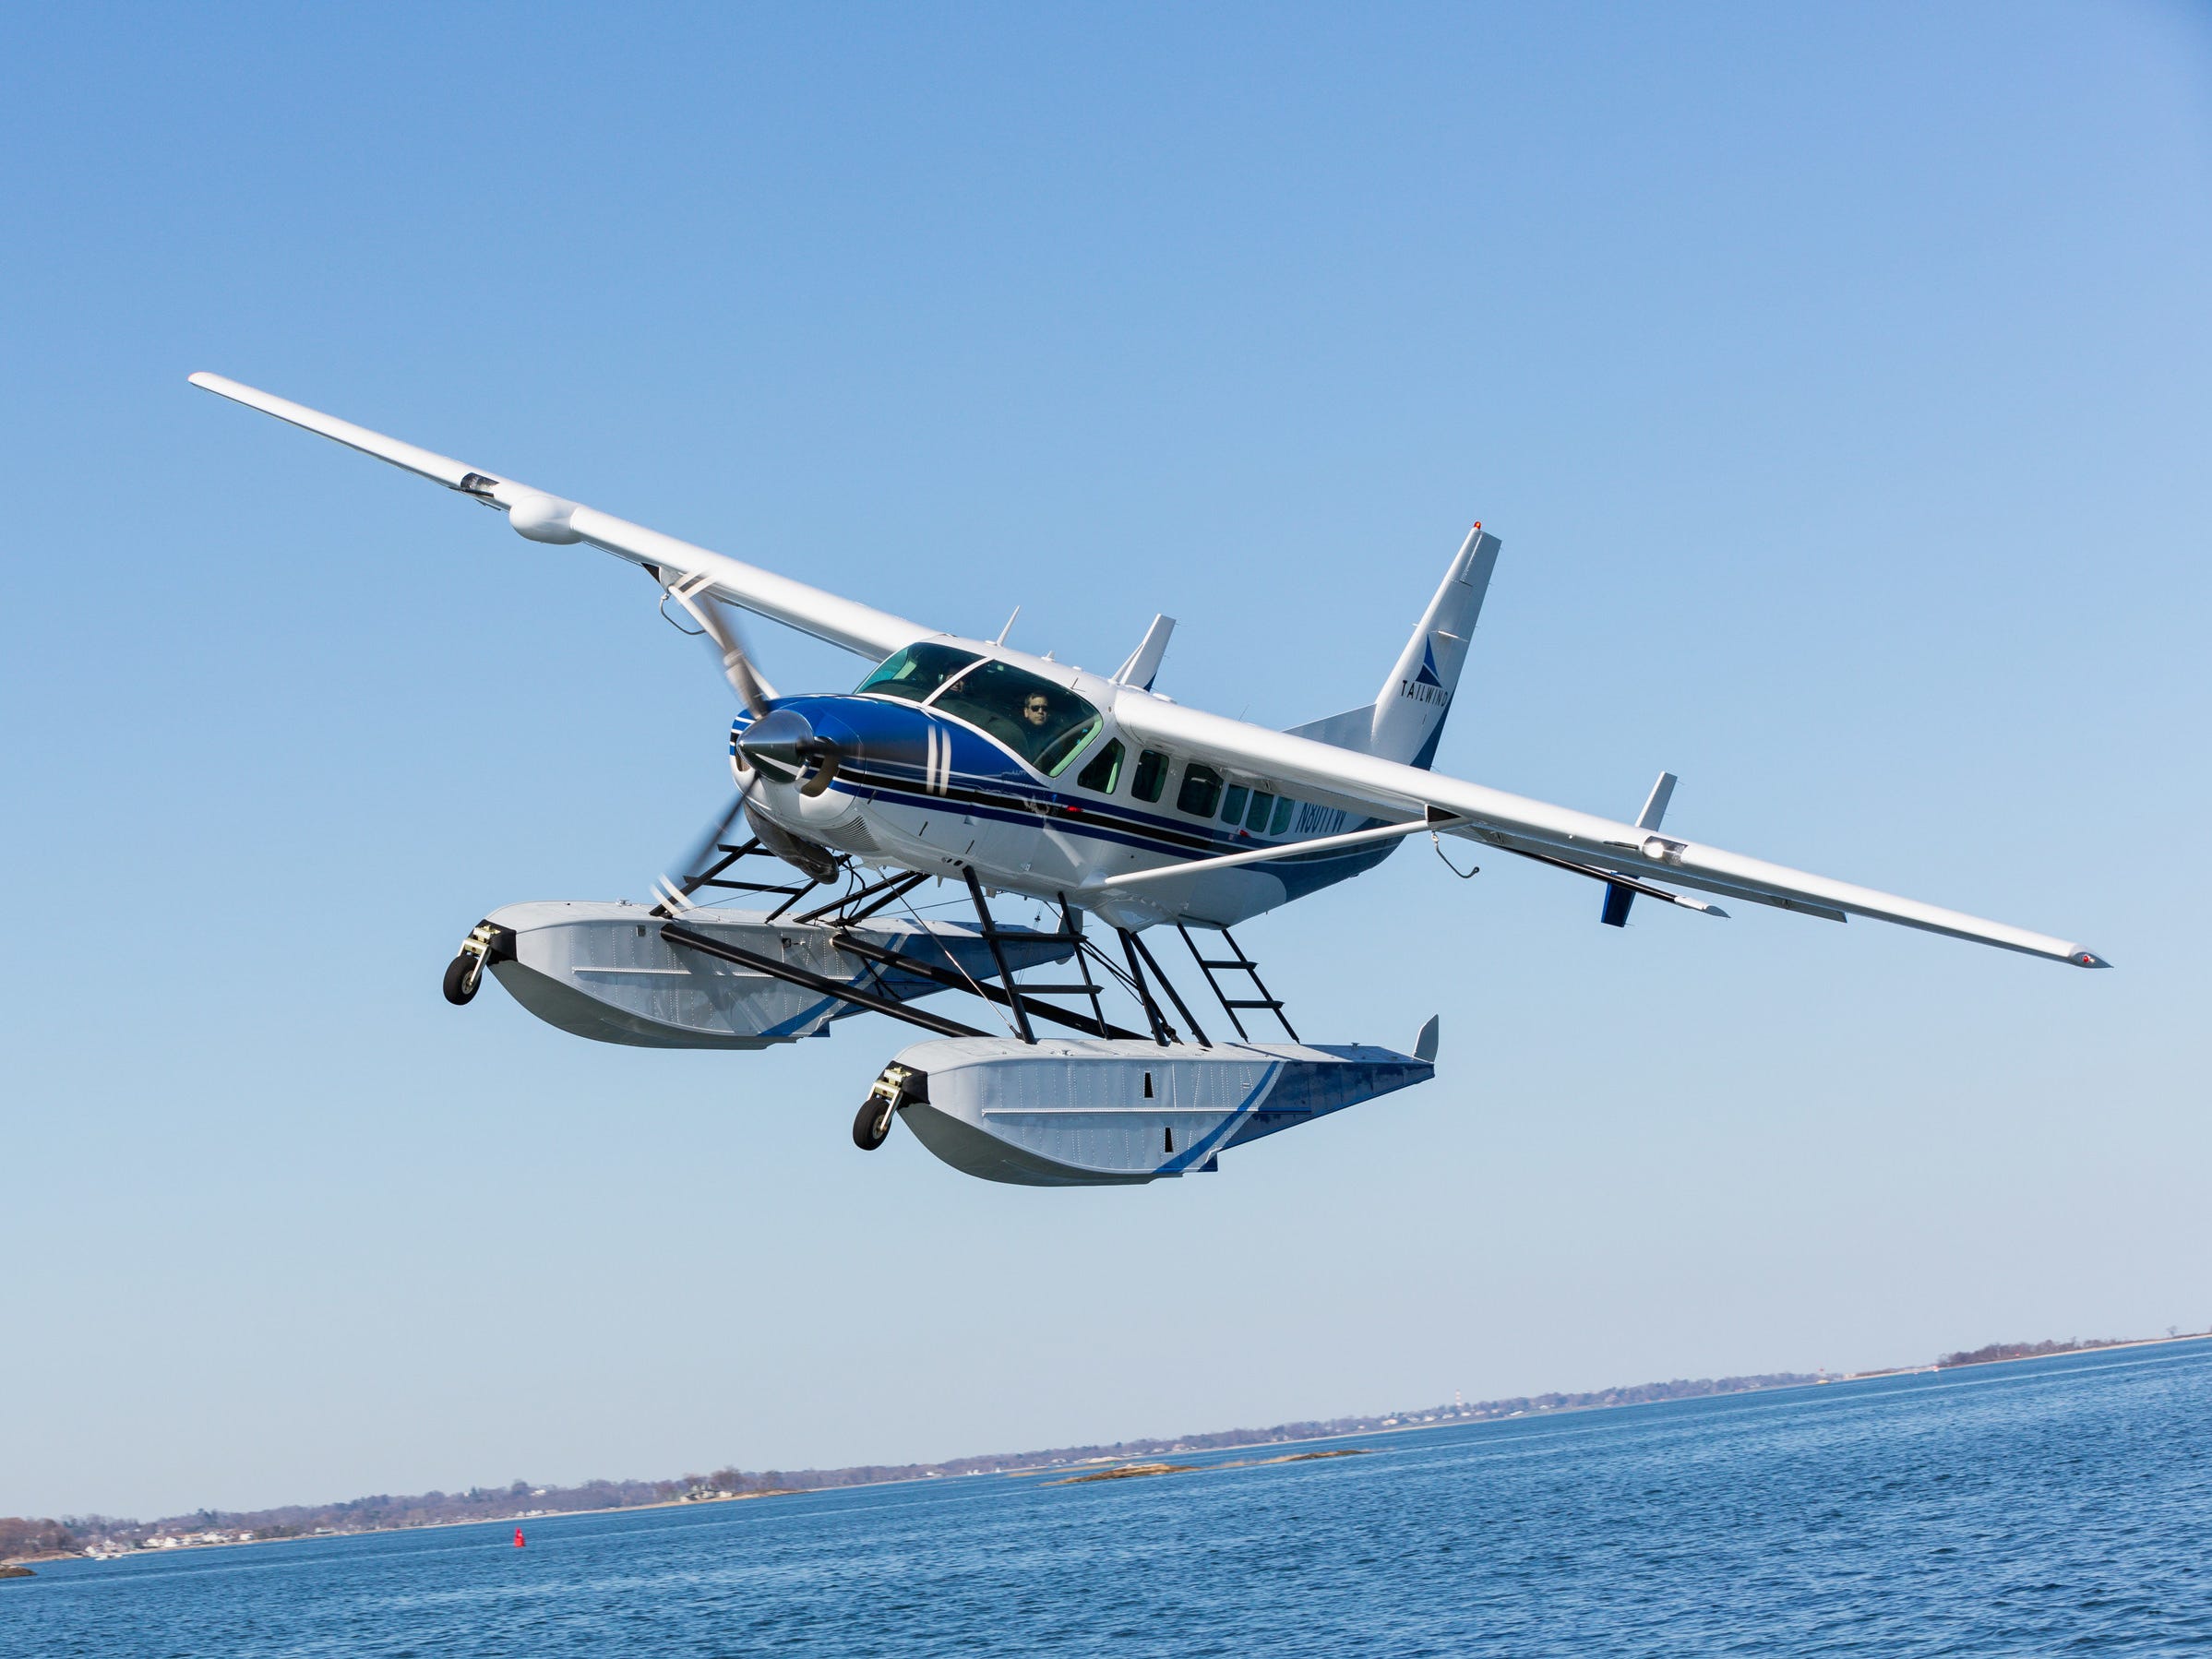 A Cessna Caravan seaplane in Boston Harbor - Tailwind Air Cessna Caravan seaplane